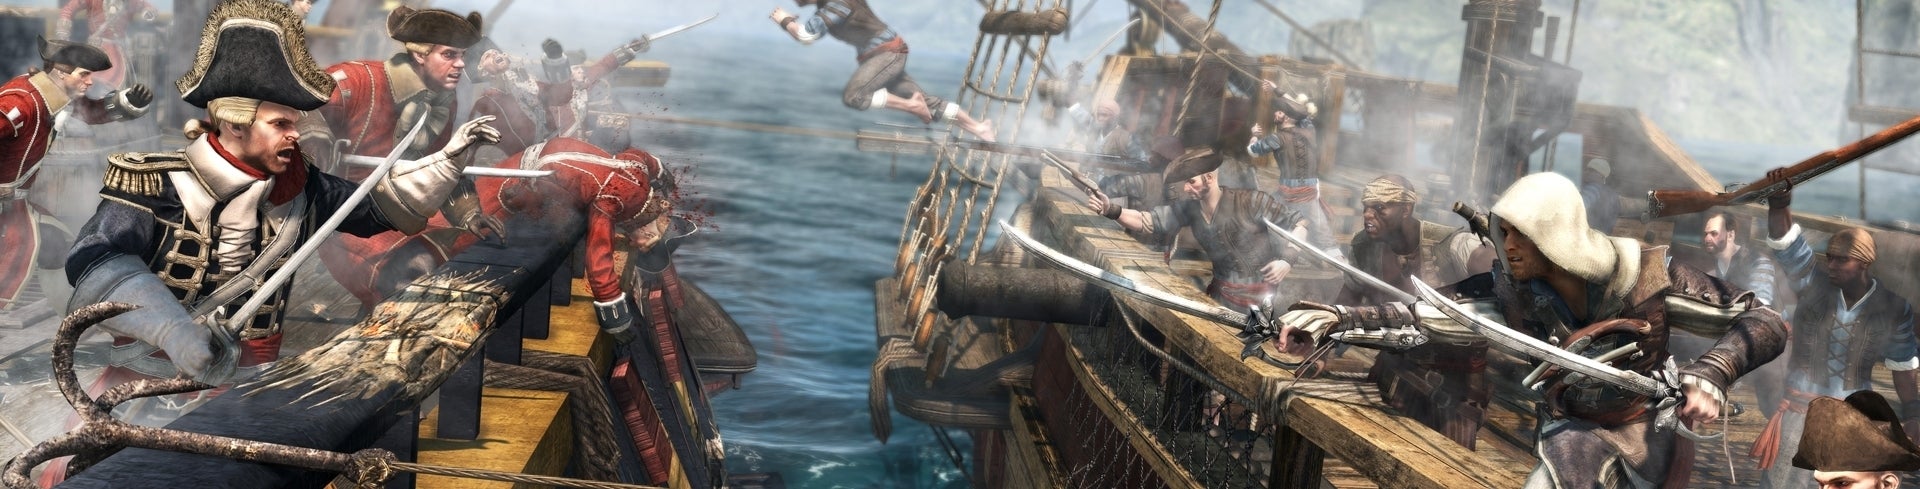 Afbeeldingen van Season Pass Assassin's Creed IV: Black Flag onthuld